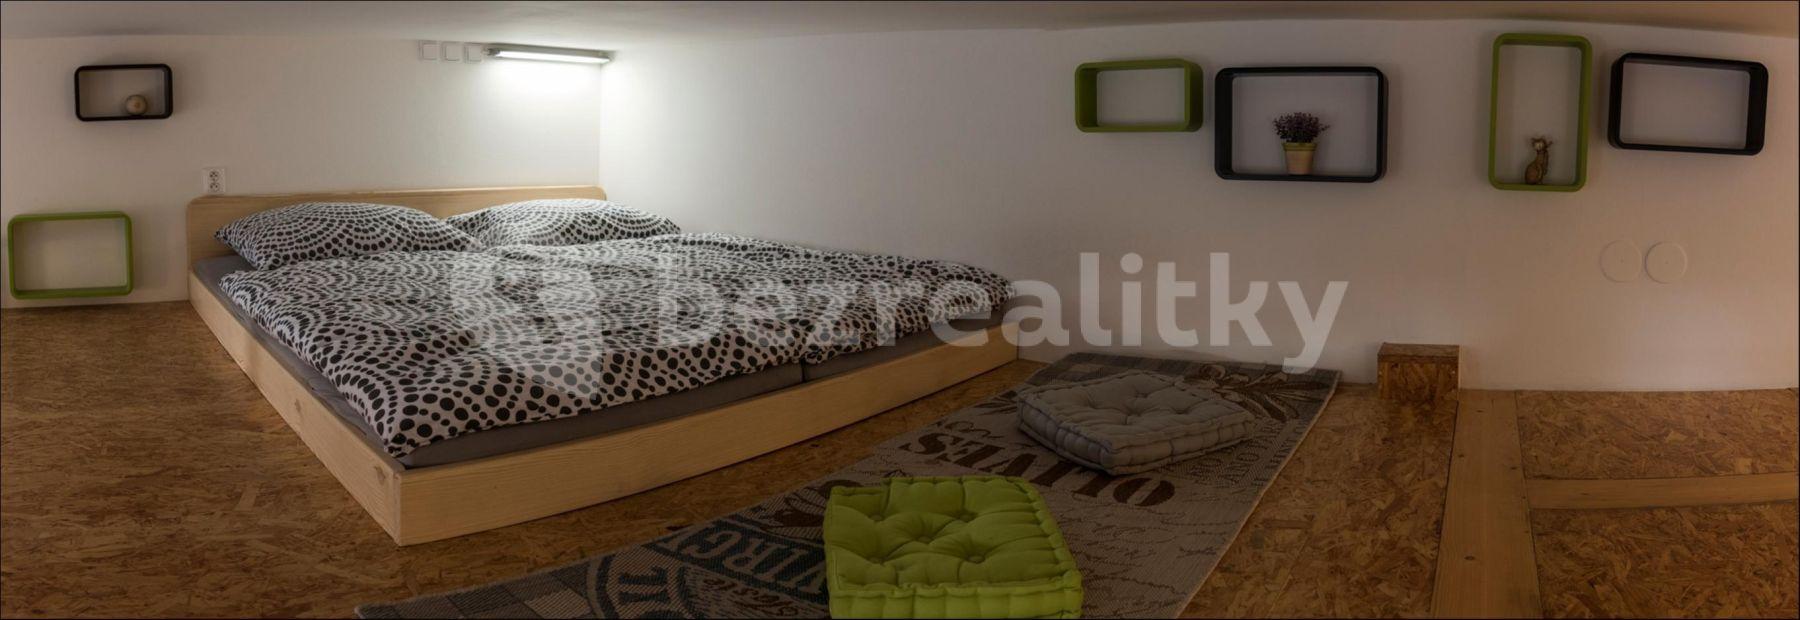 Studio flat to rent, 35 m², Cejl, Brno, Jihomoravský Region